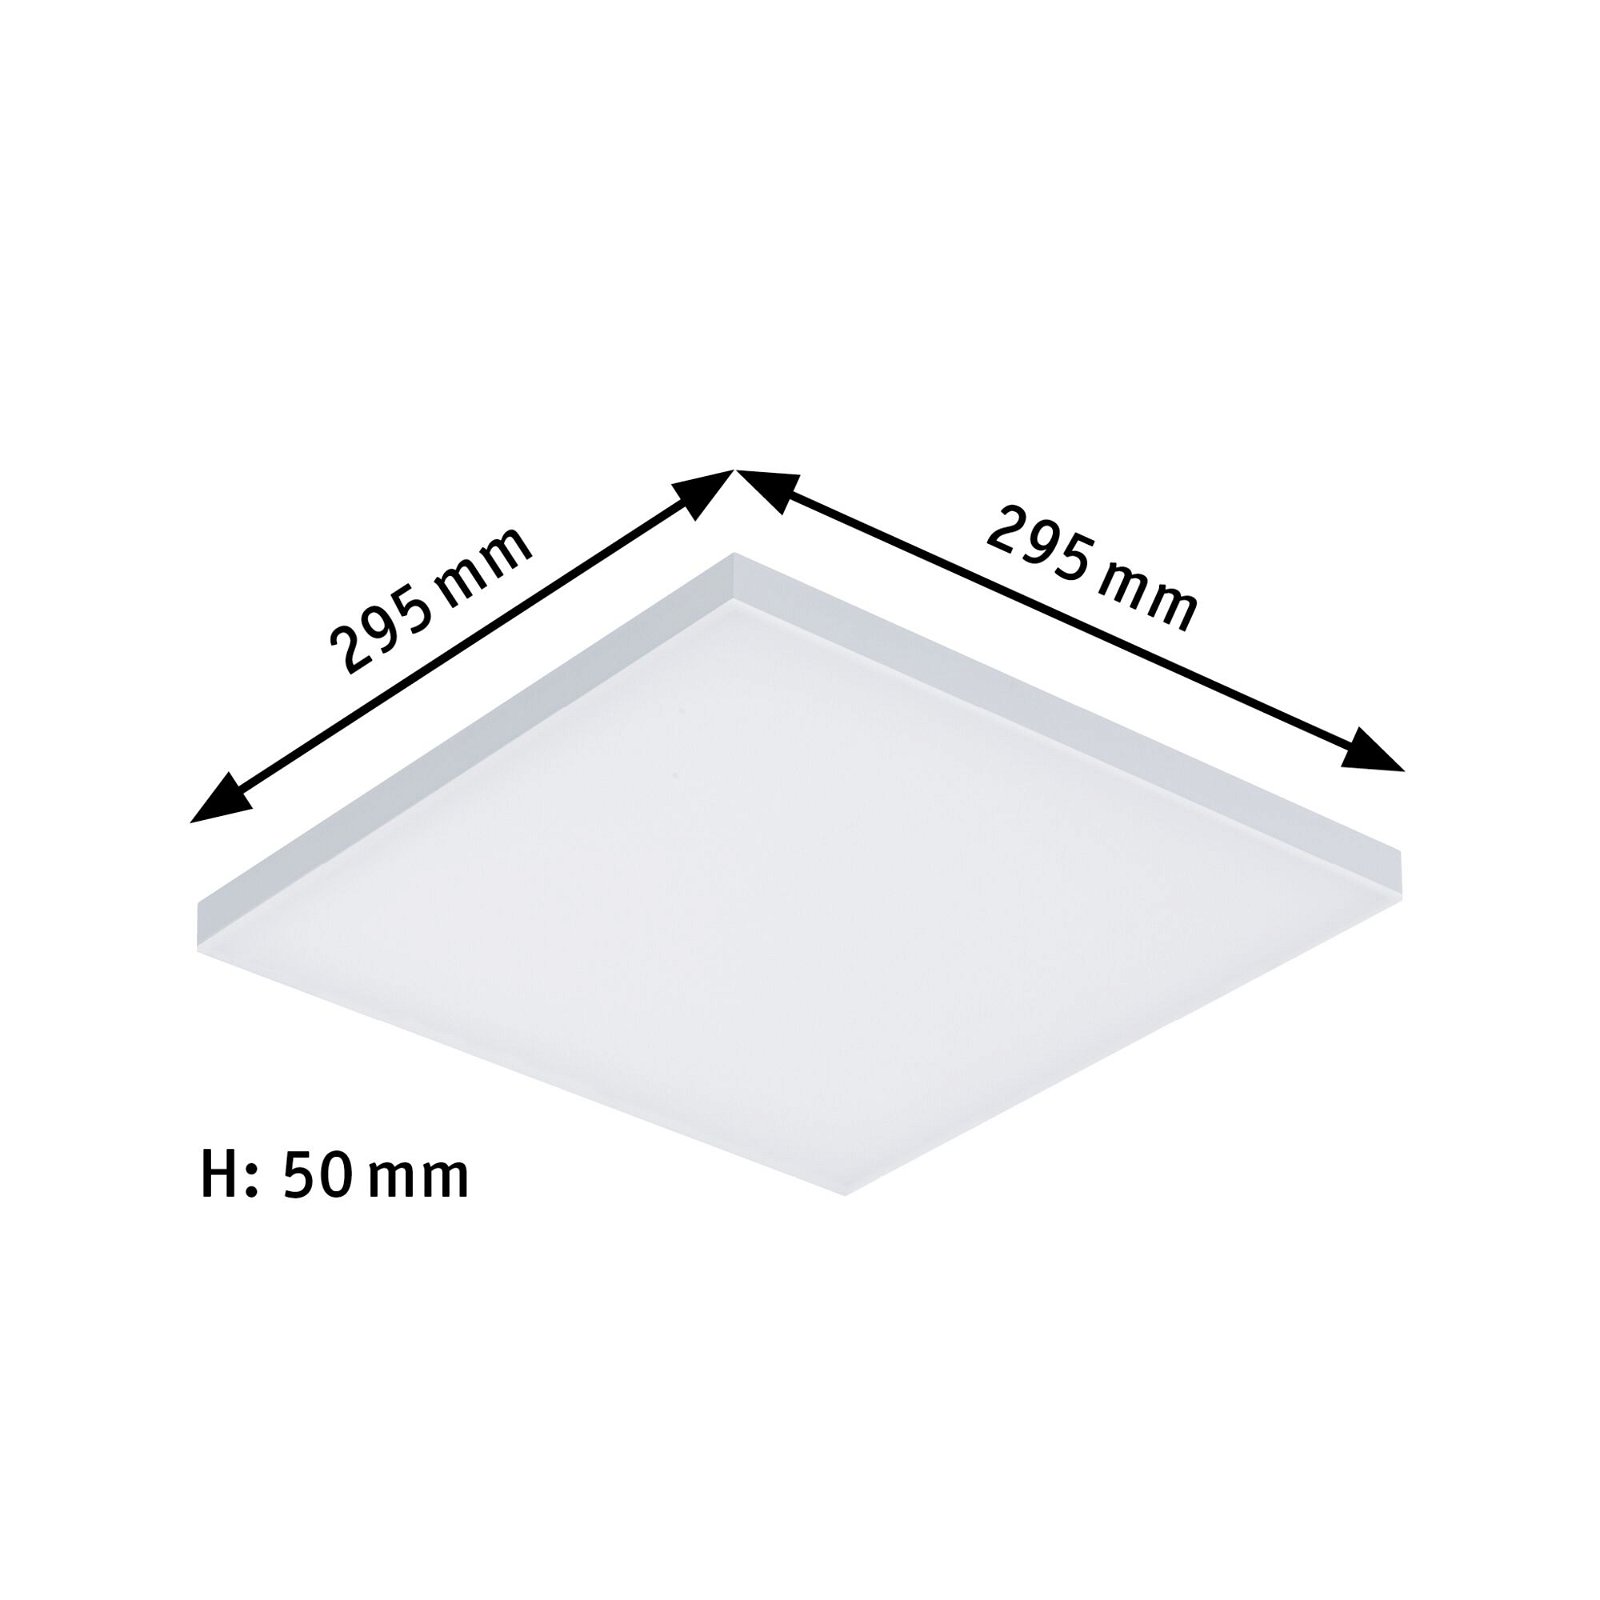 LED Panel Smart Home Zigbee Velora eckig 295x295mm 10,5W 1100lm Tunable White Weiß matt dimmbar